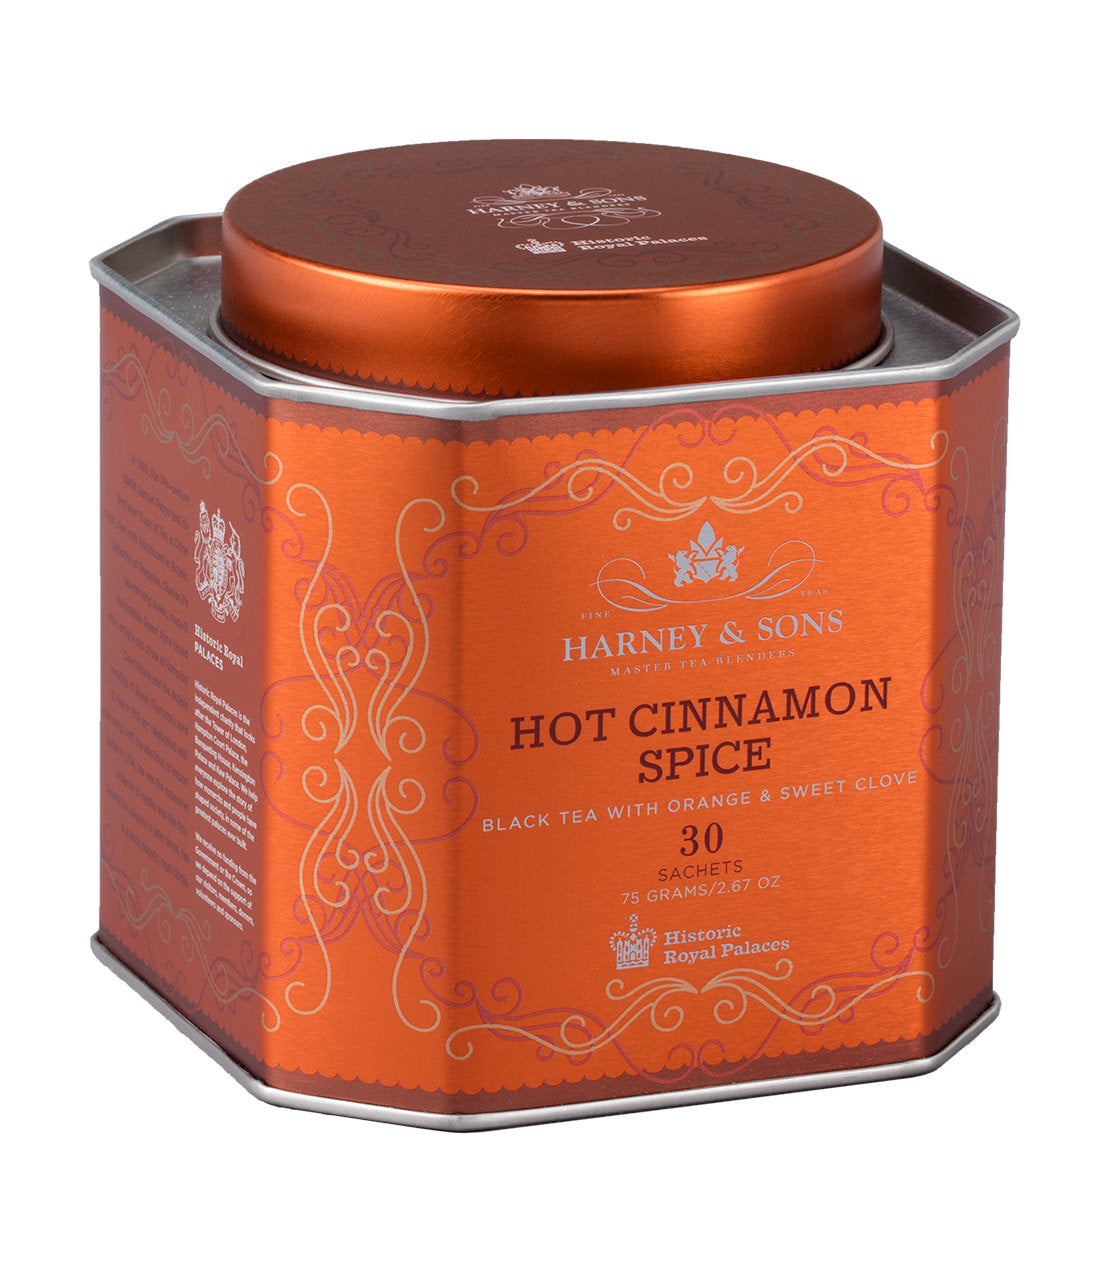 Hot Cinnamon Spice Tea by Harney & Sons.